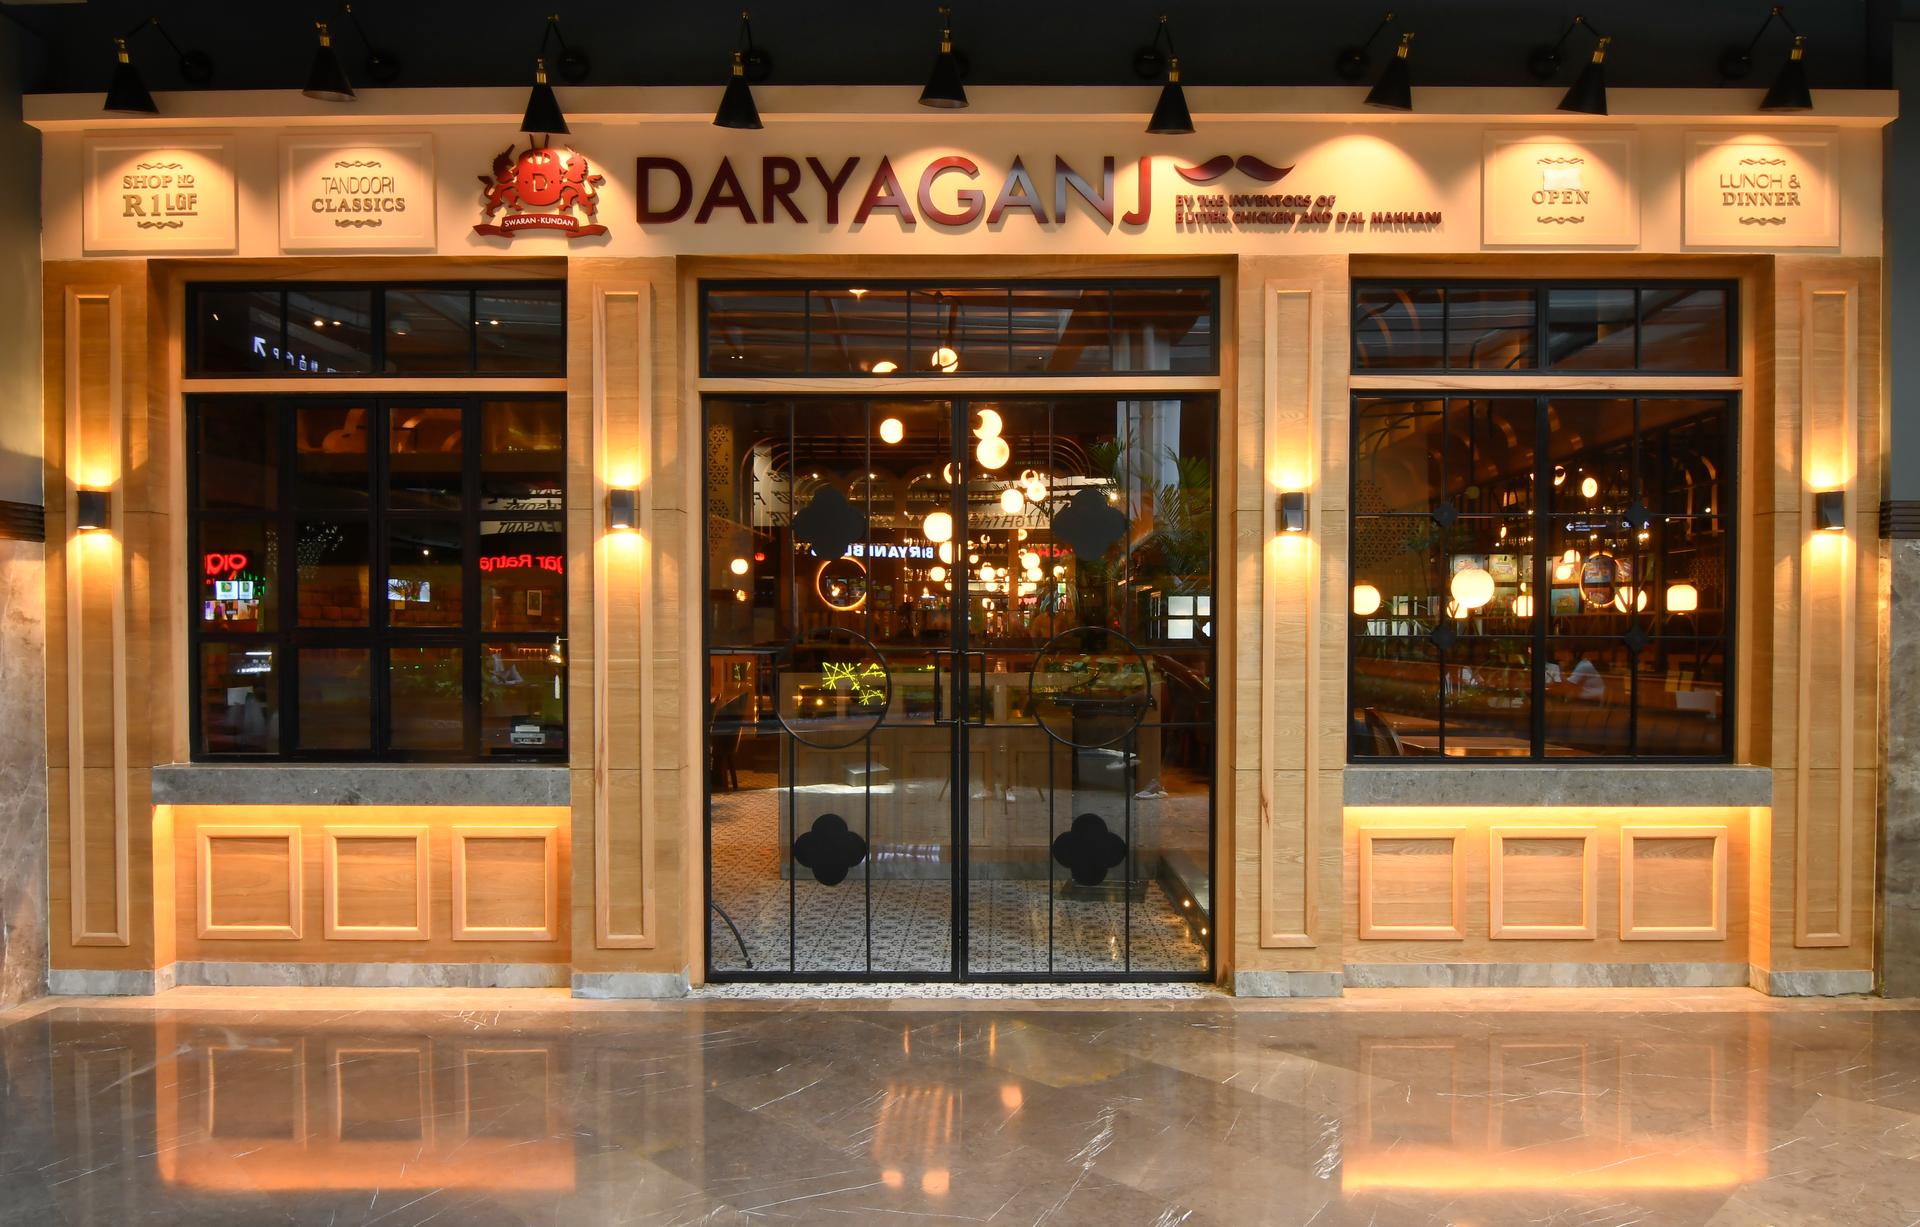 The exterior of the Daryaganj restaurant near Delhi’s airport in India.